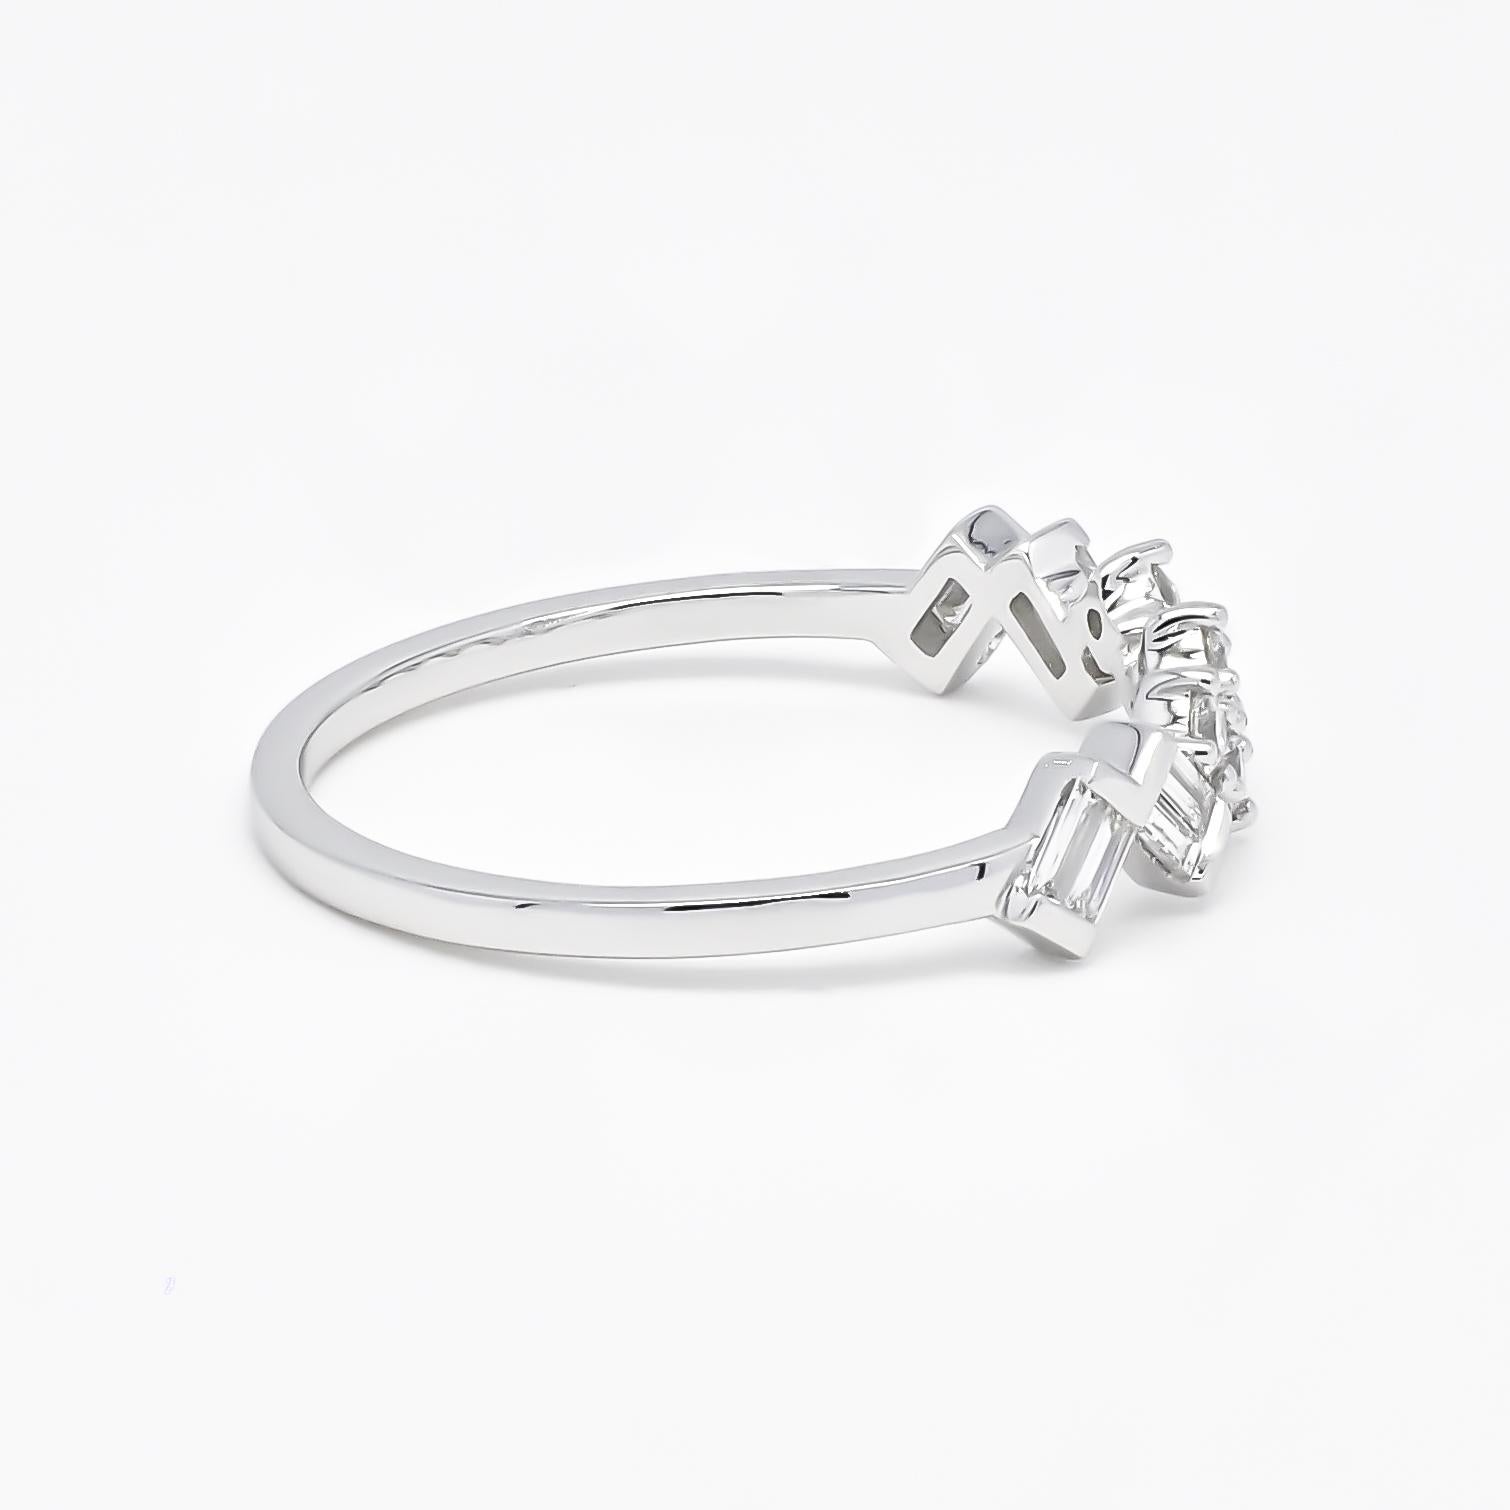 For Sale:  Natural Diamond Ring 18k White Gold Single Row Ring, Minimalistic Diamond Ring 2